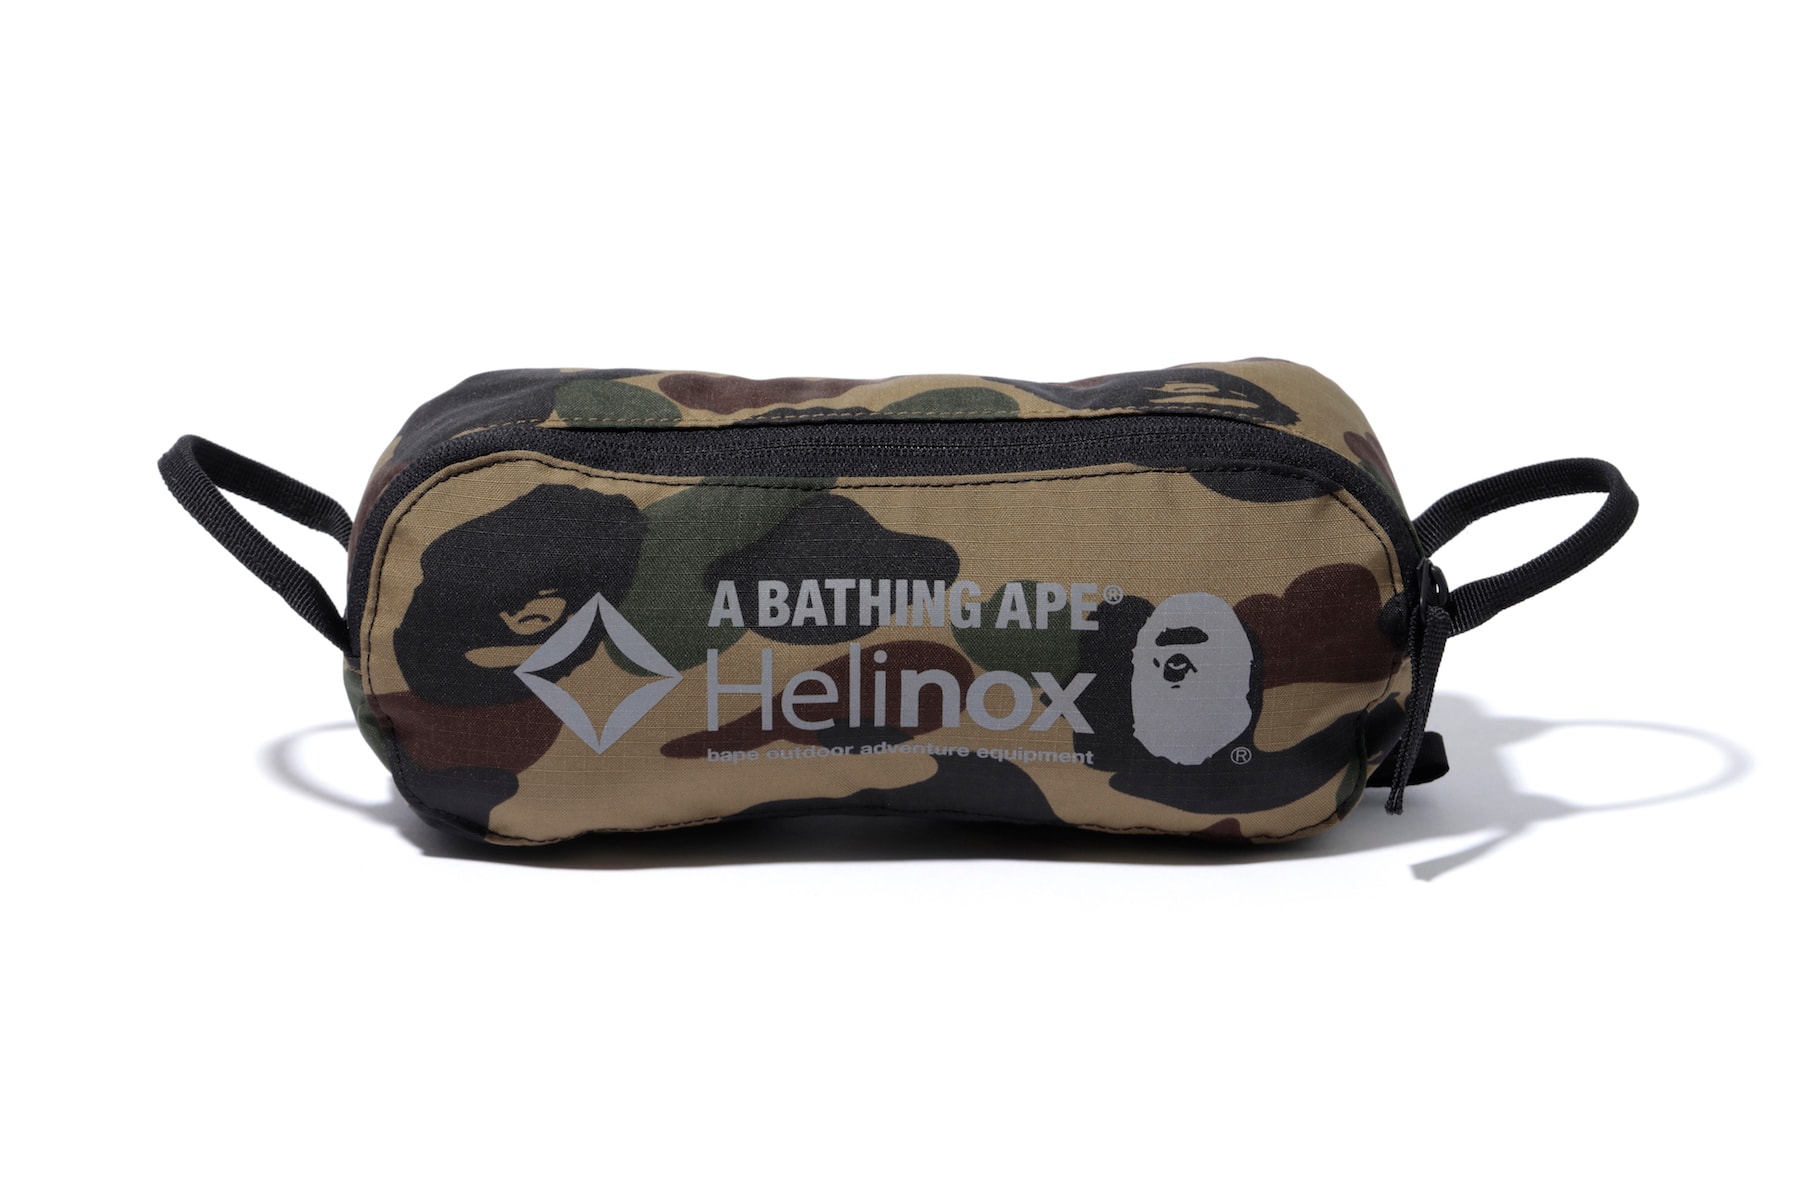 A Bathing Ape x Helinox 2017 Collaboration